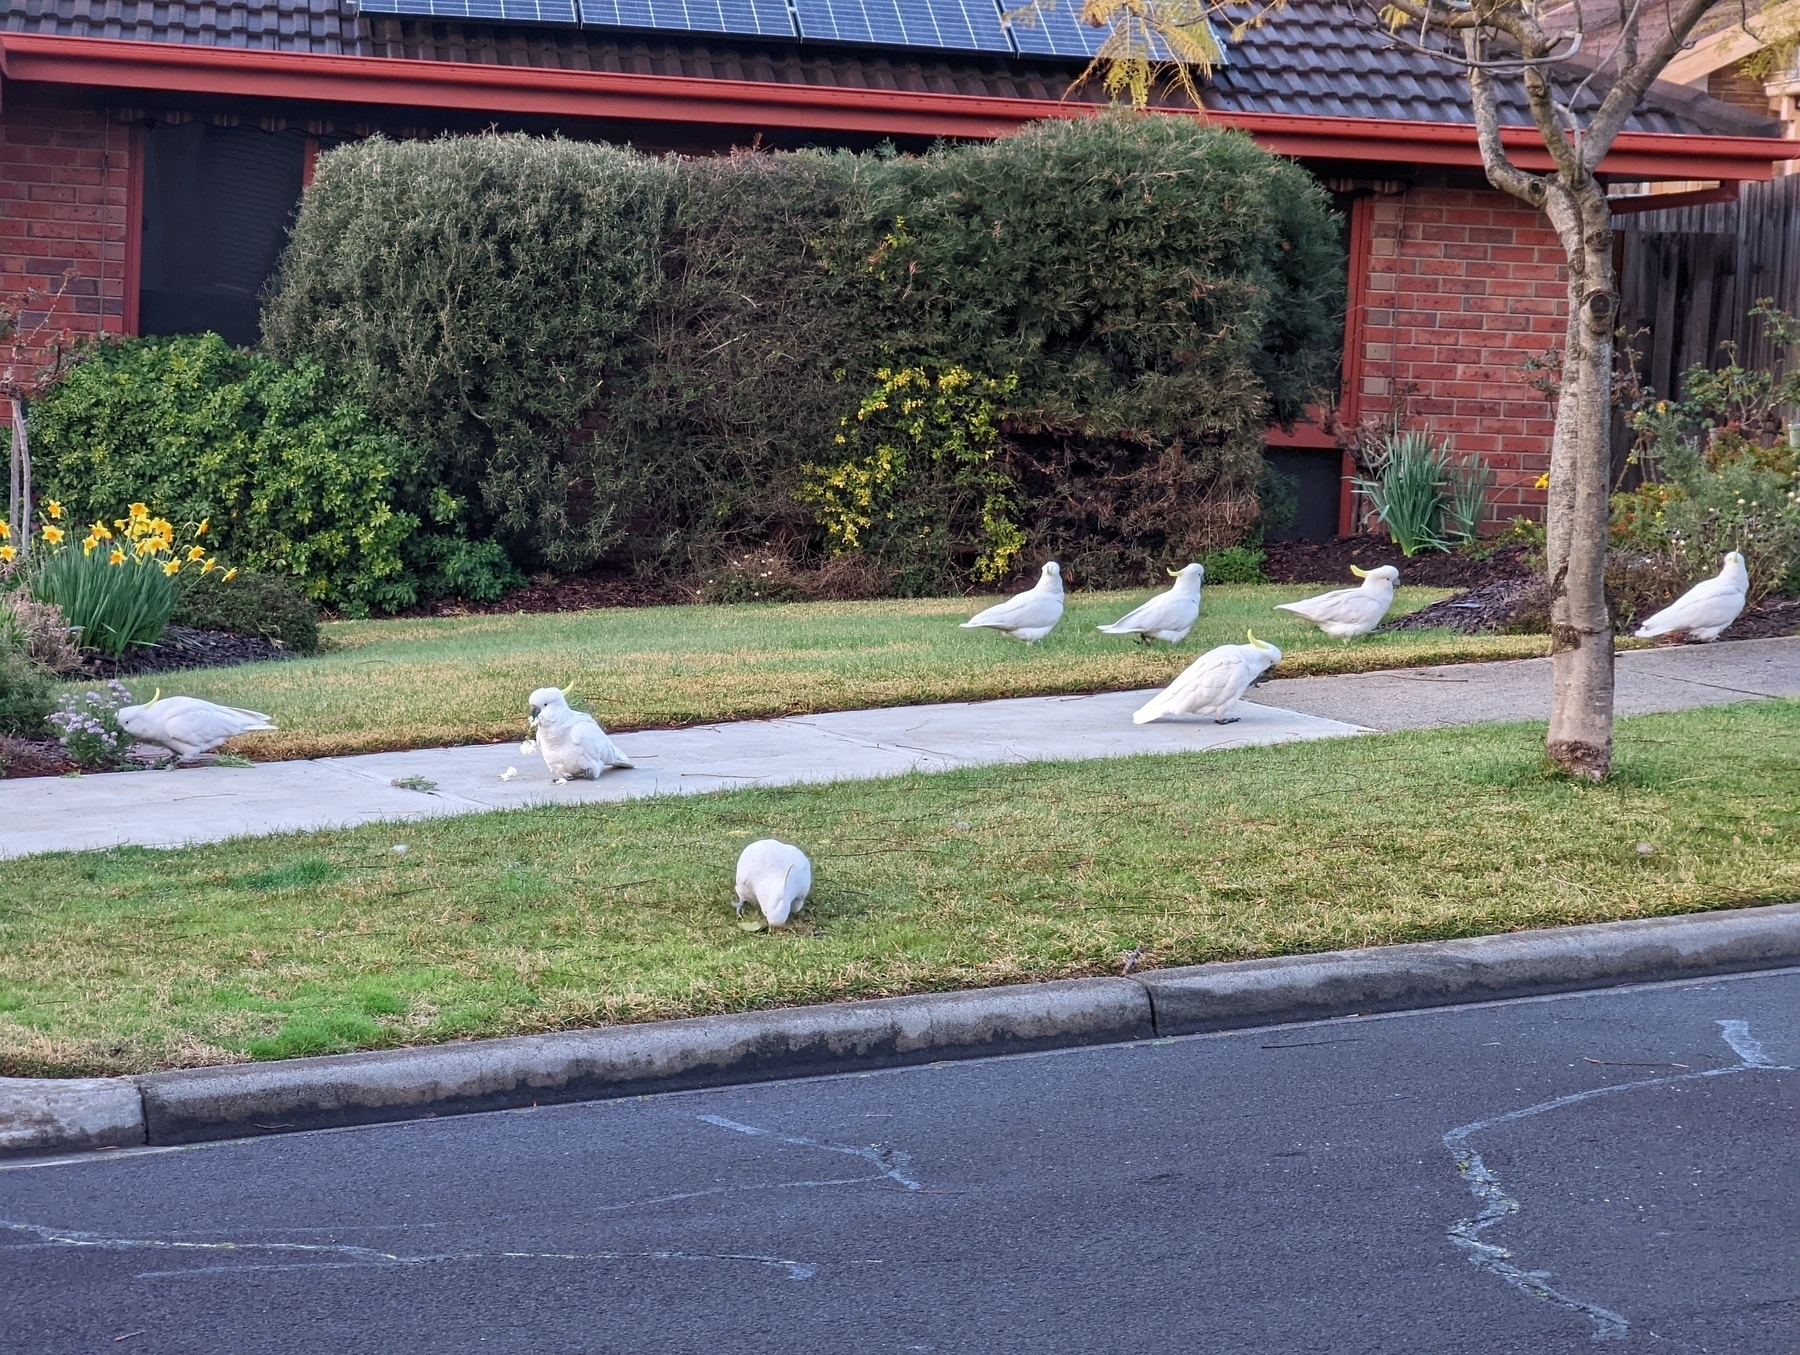 Sulphur-crested cockatoos feeding outside someones house.